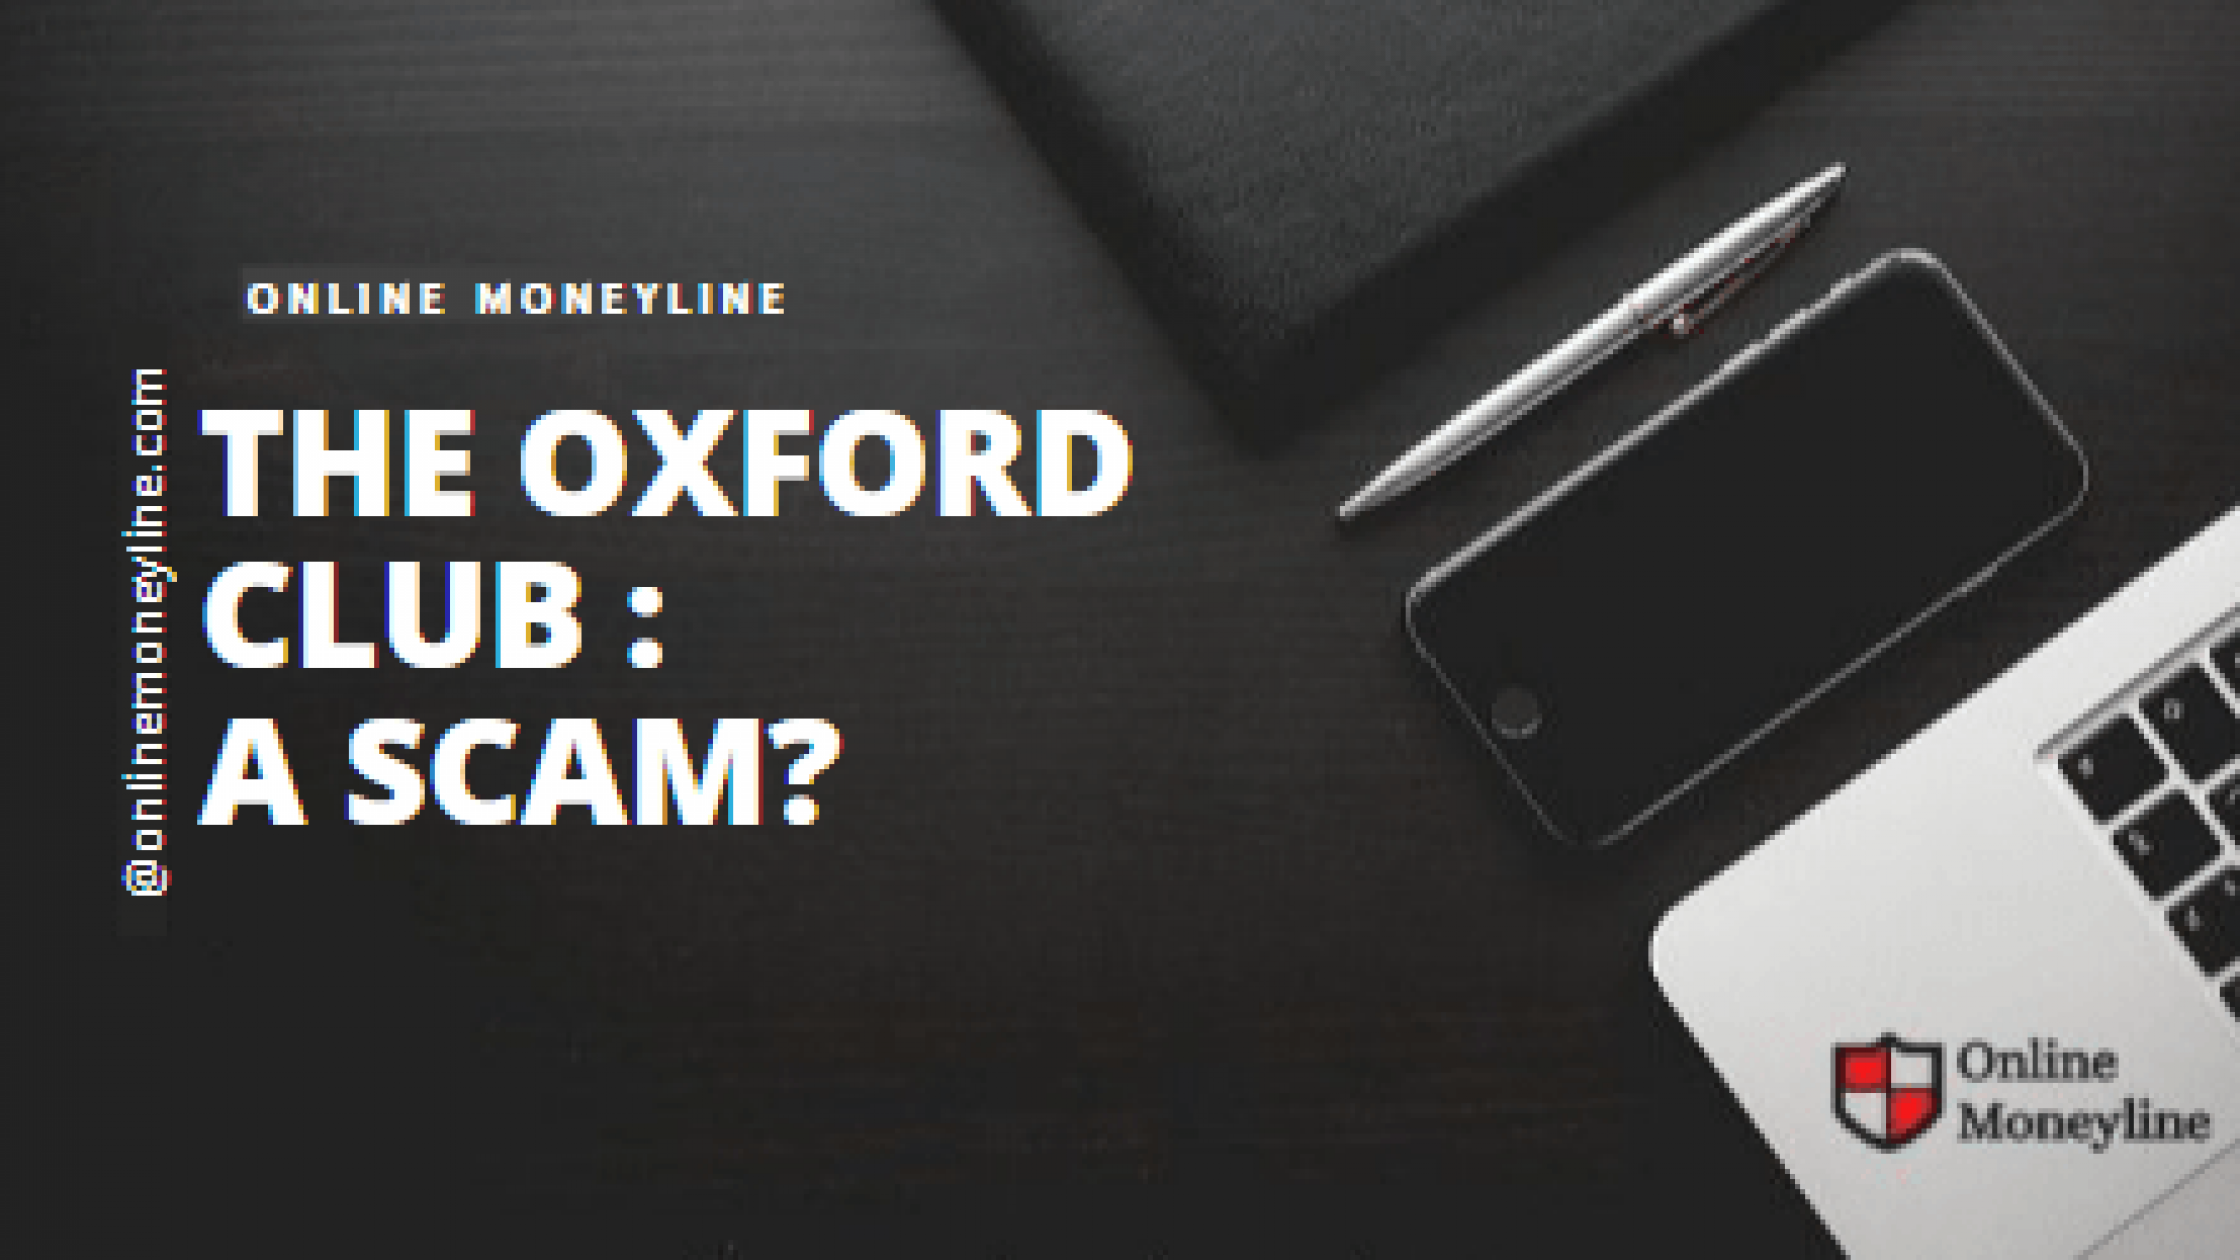 The Oxford Club : A Scam?